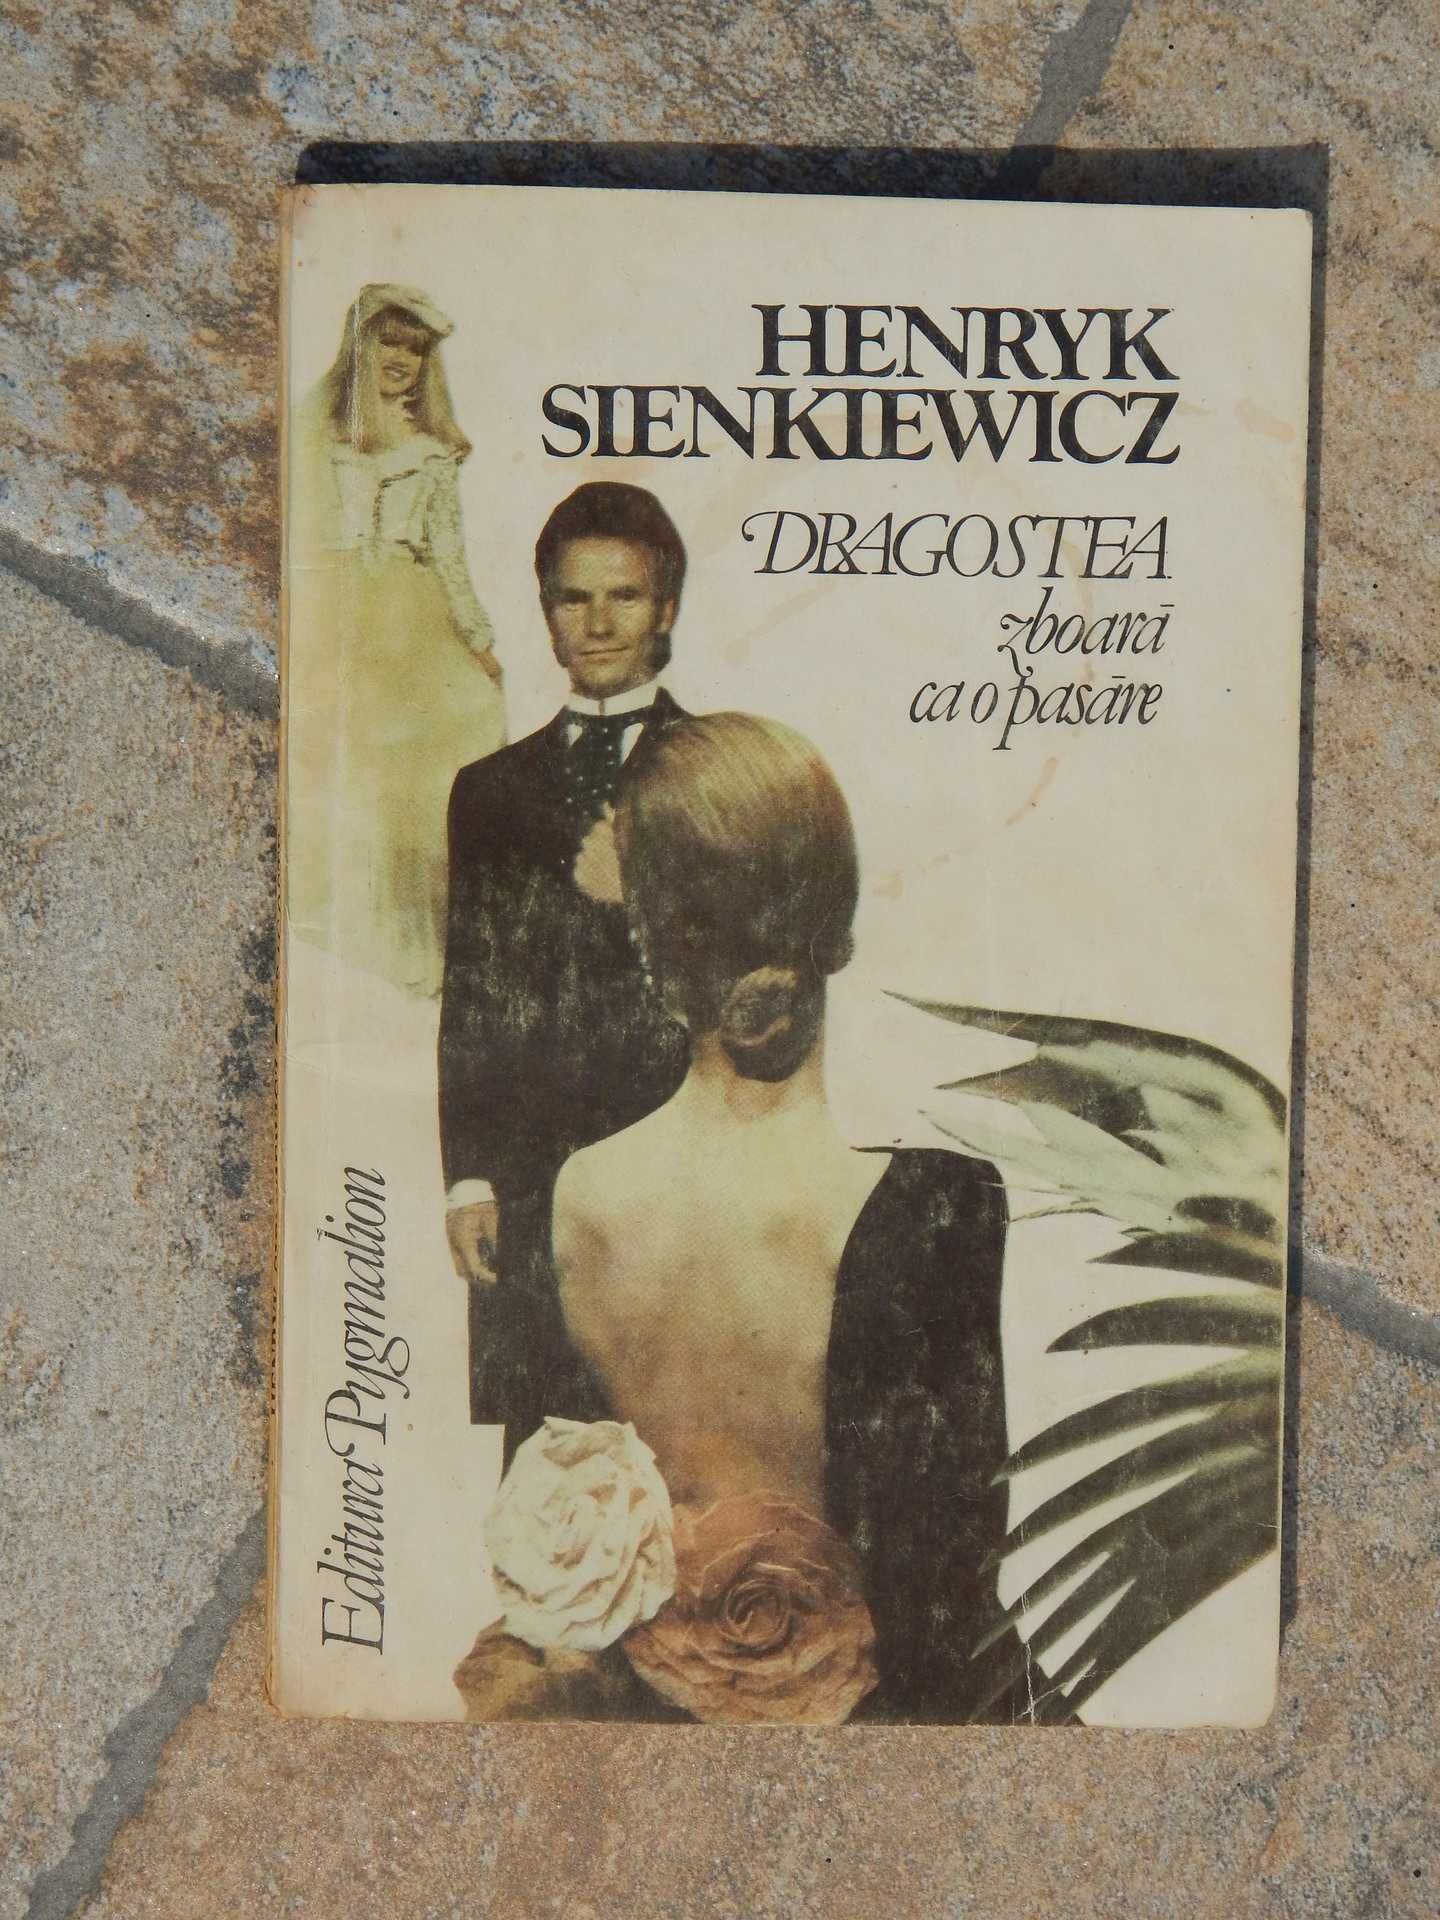 Dragostea zboara ca o pasare Henrik Sienkiewicz Editura Pygmalion 1992